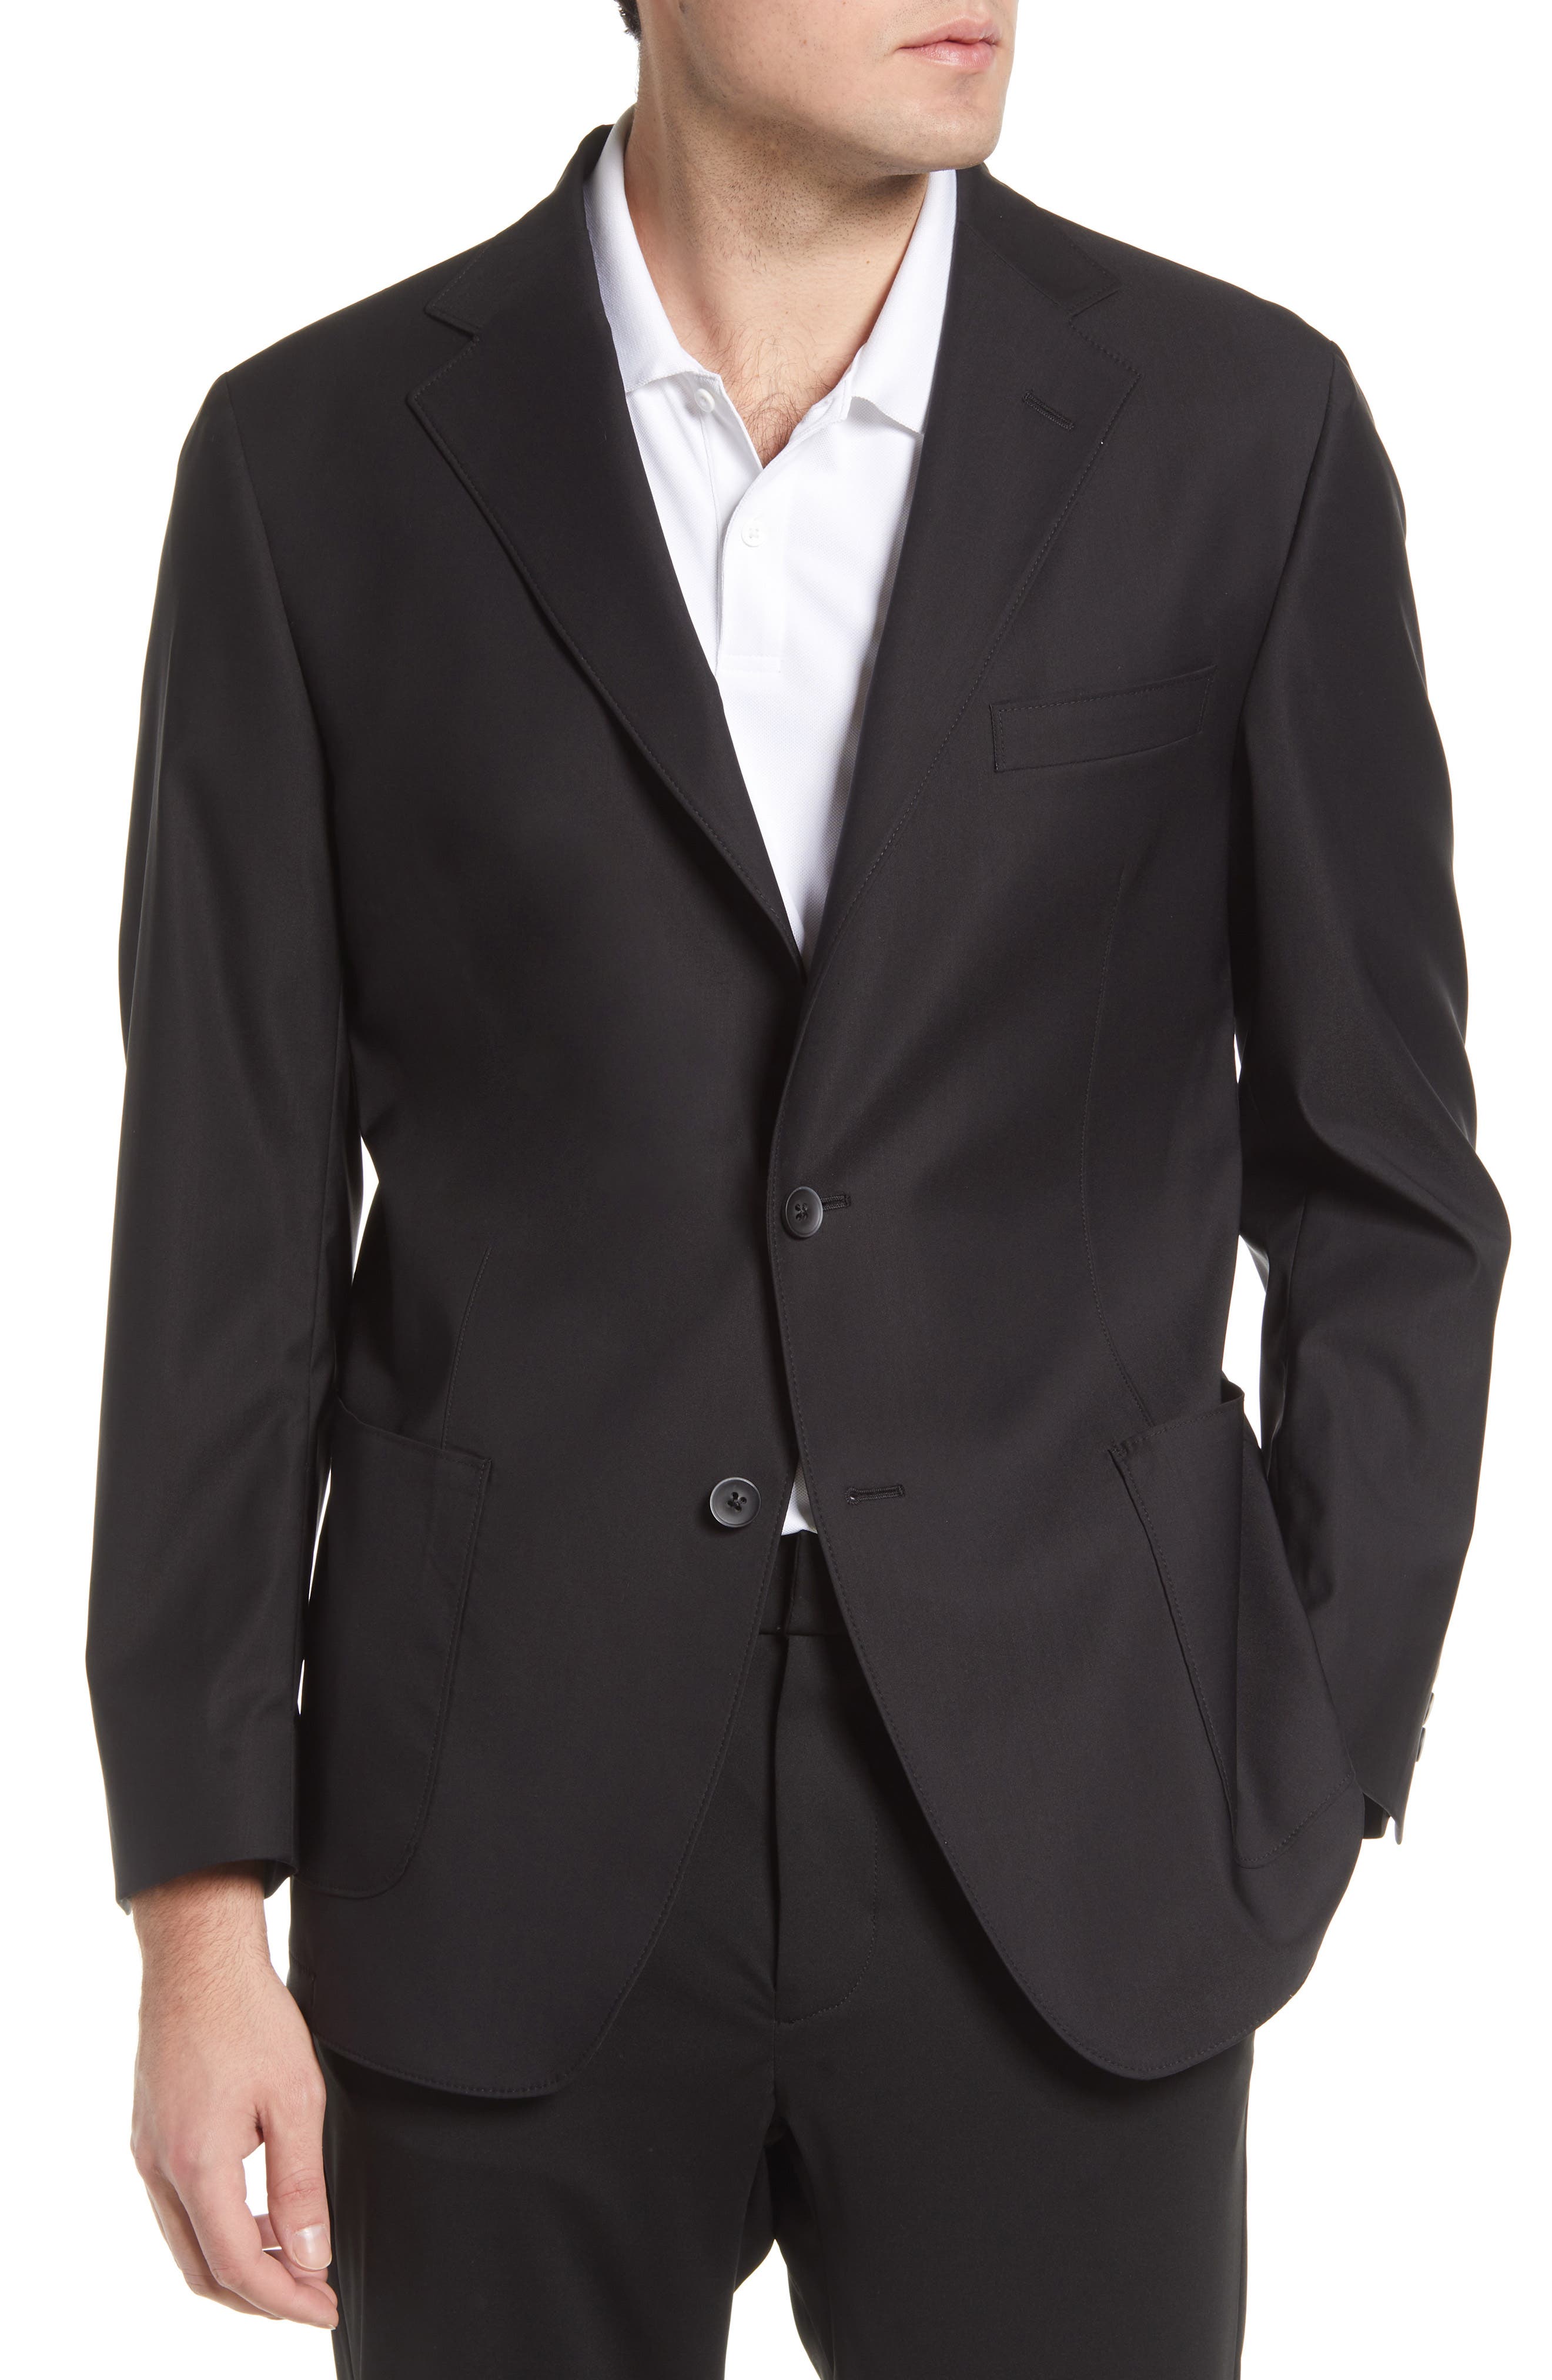 NORDSTROM Elliott Boys Black Lined 2-Button Sport Coat Jacket Blazer NEW 18 $109 